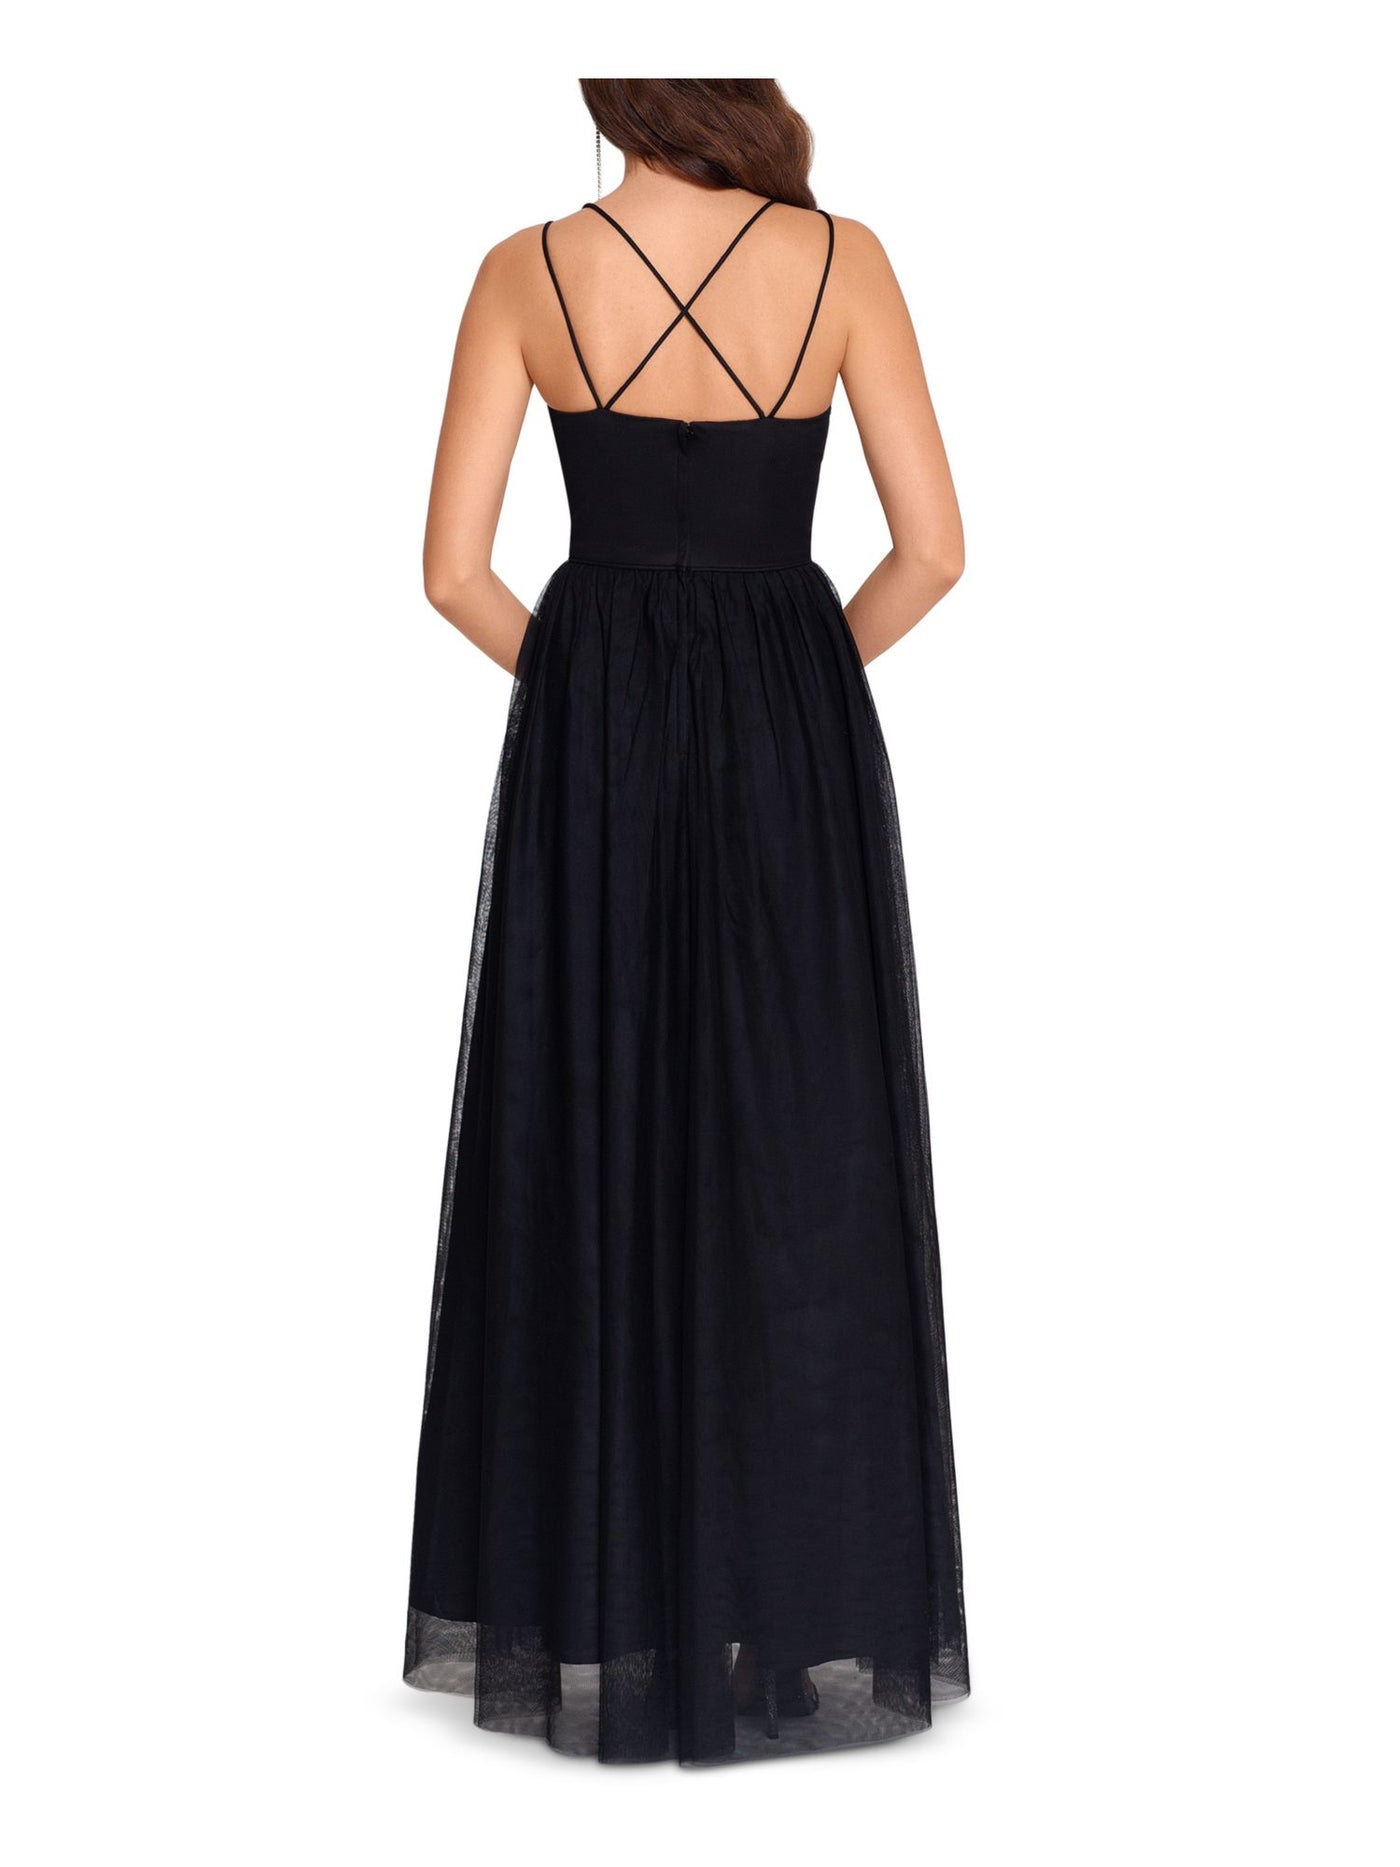 BLONDIE Womens Black Embellished Spaghetti Strap Scoop Neck Full-Length Formal Fit + Flare Dress Juniors 5